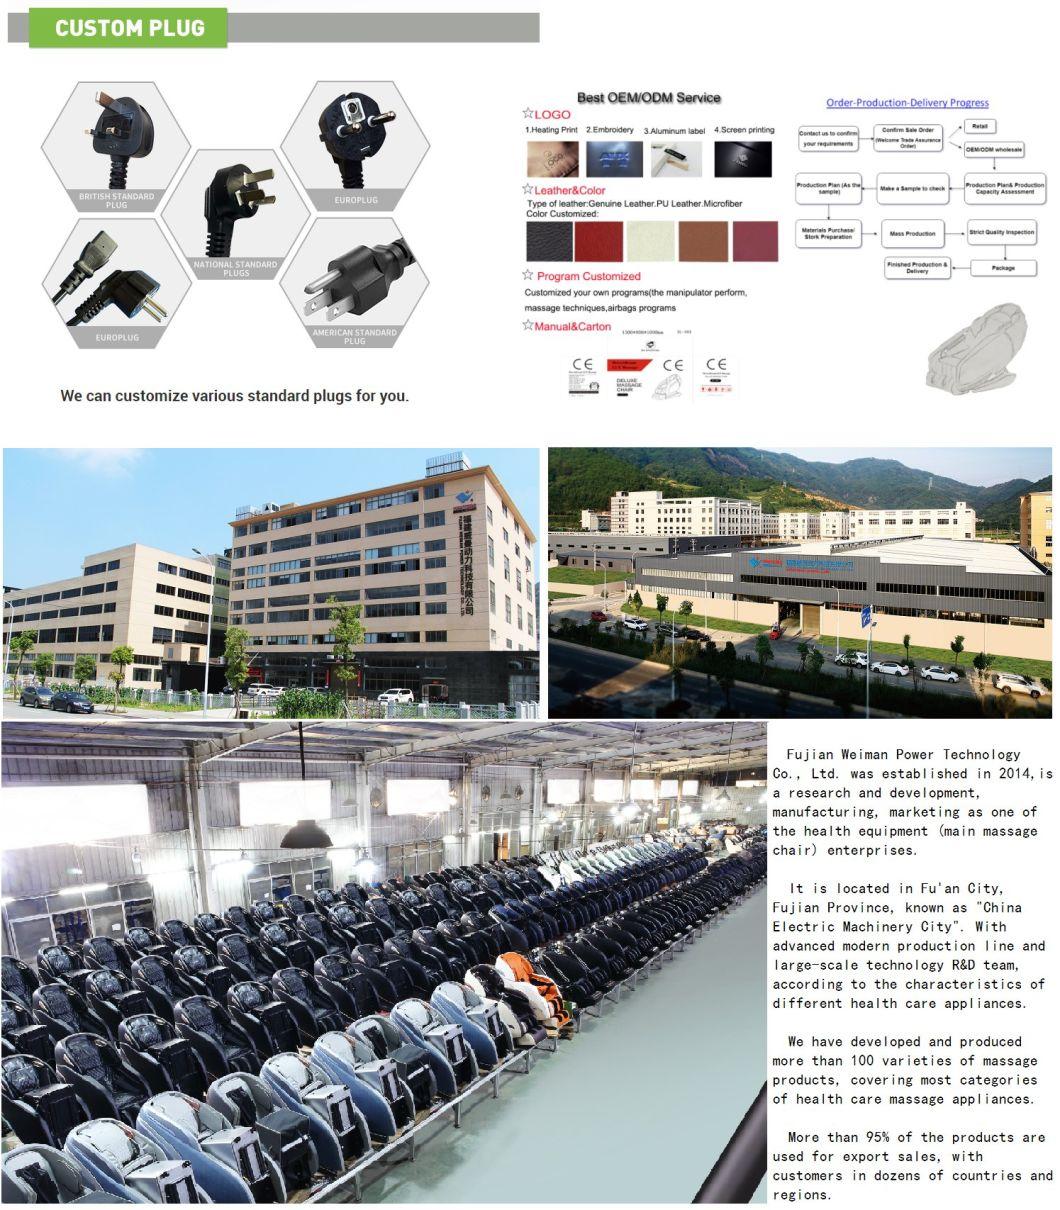 Aluminum Care Health Medical Full Leg Salon Massage Chair China Better Manufacturer